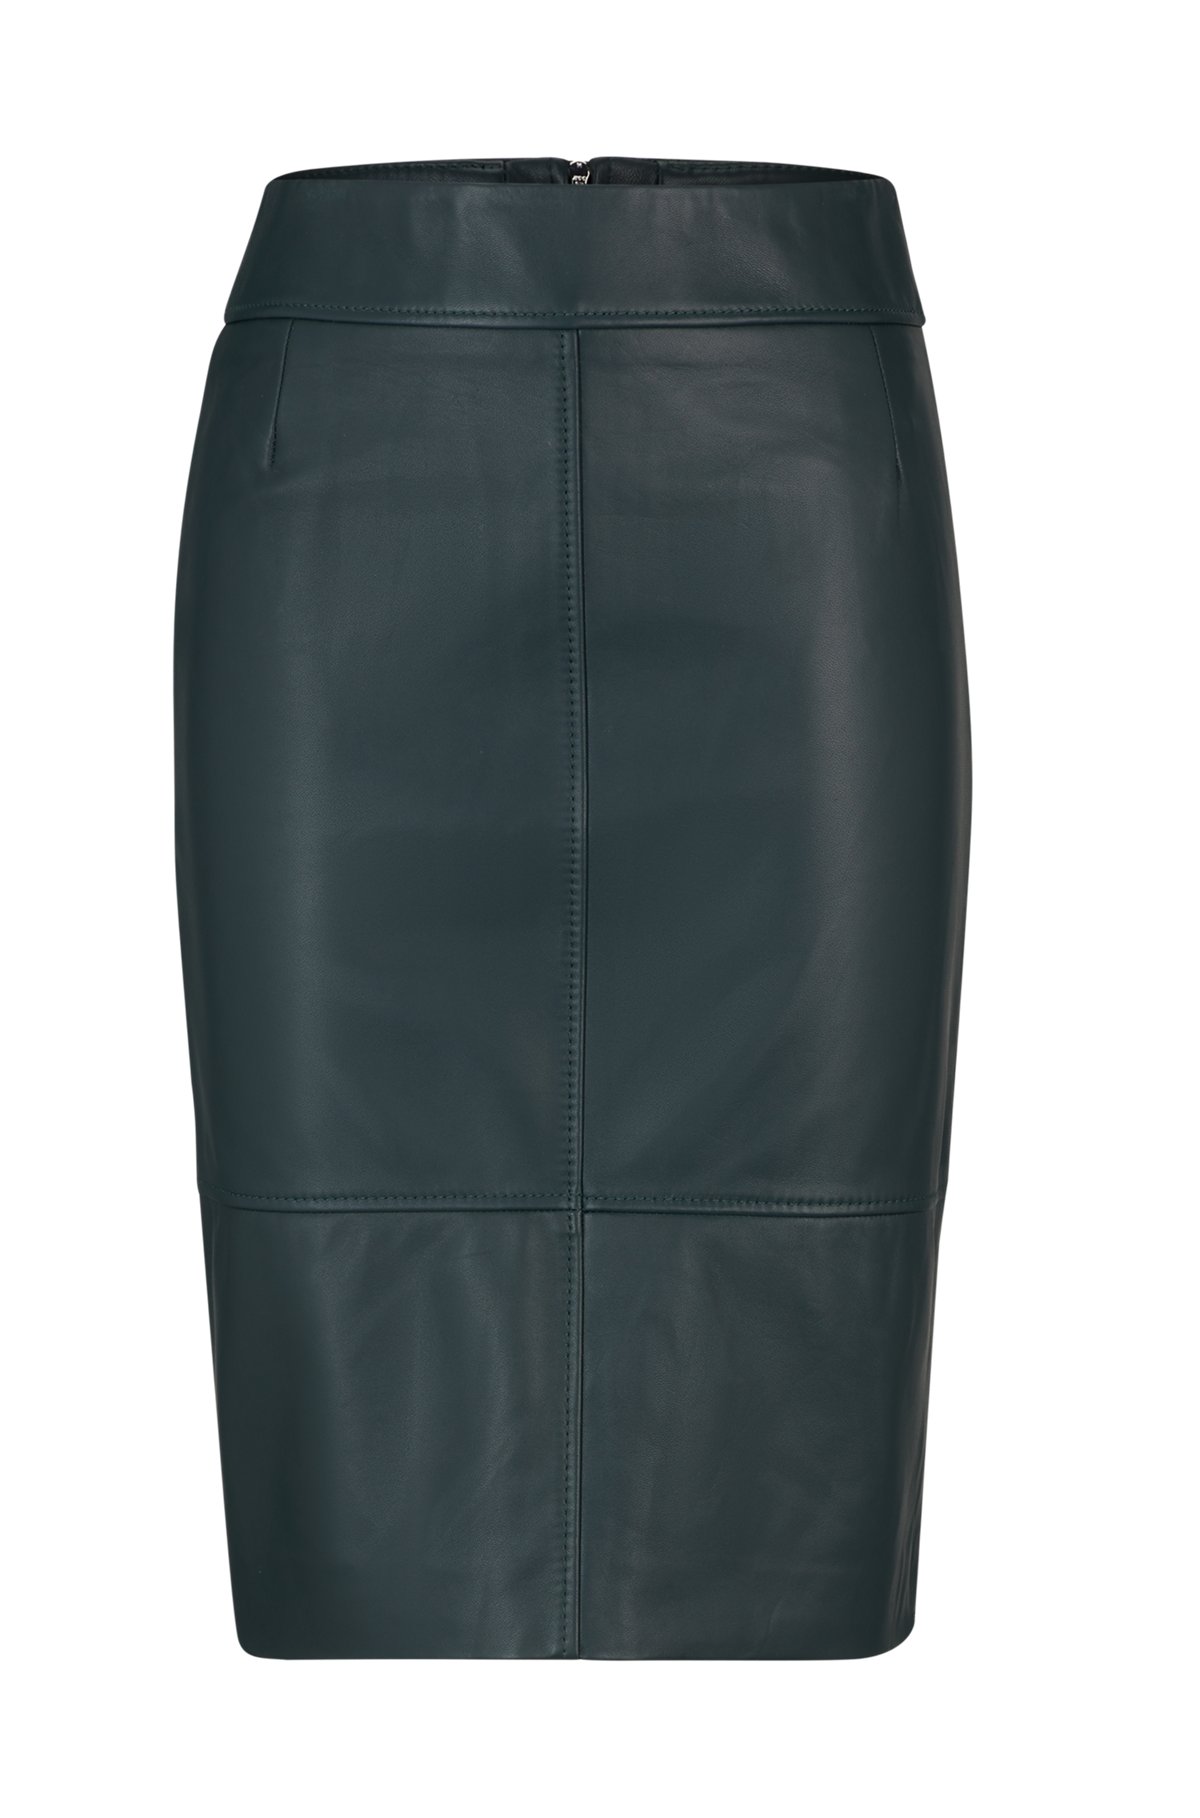 Regular-fit pencil skirt in soft leather, Dark Green